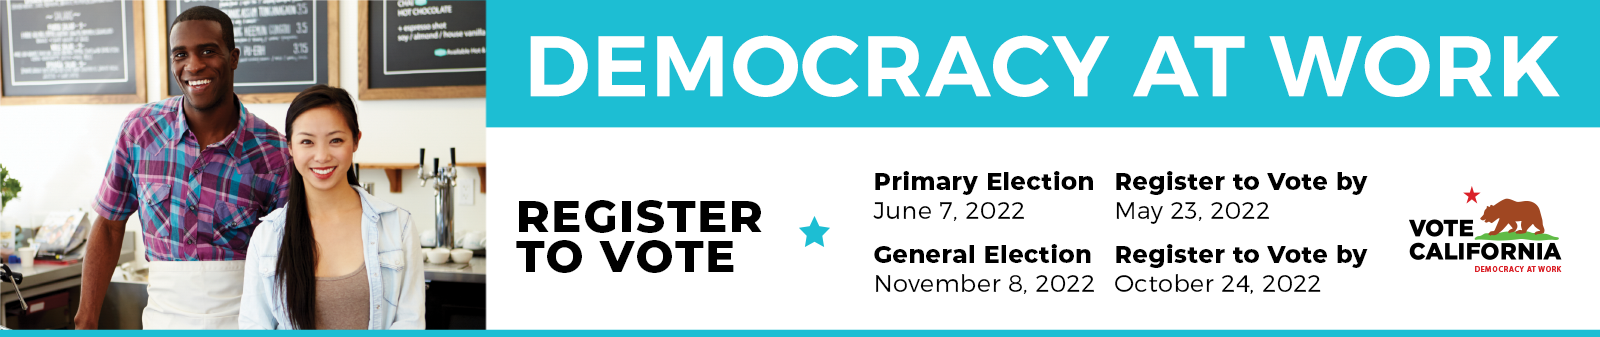 Democracy at work logo, register to vote in 2018